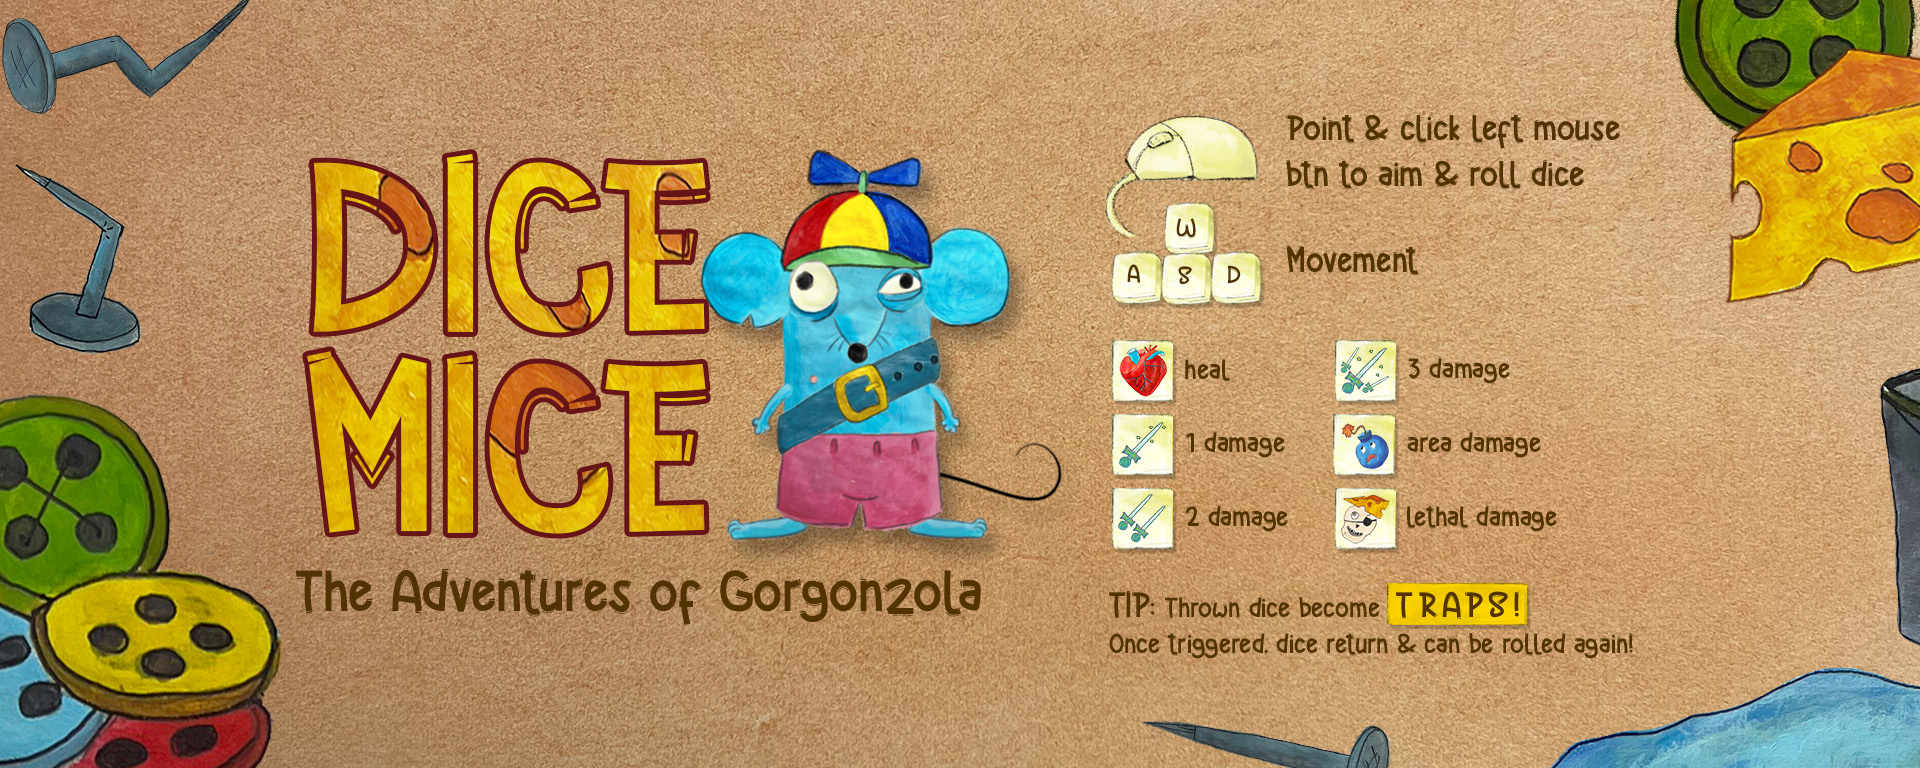 Dice Mice - The Adventures of Gorgonzola